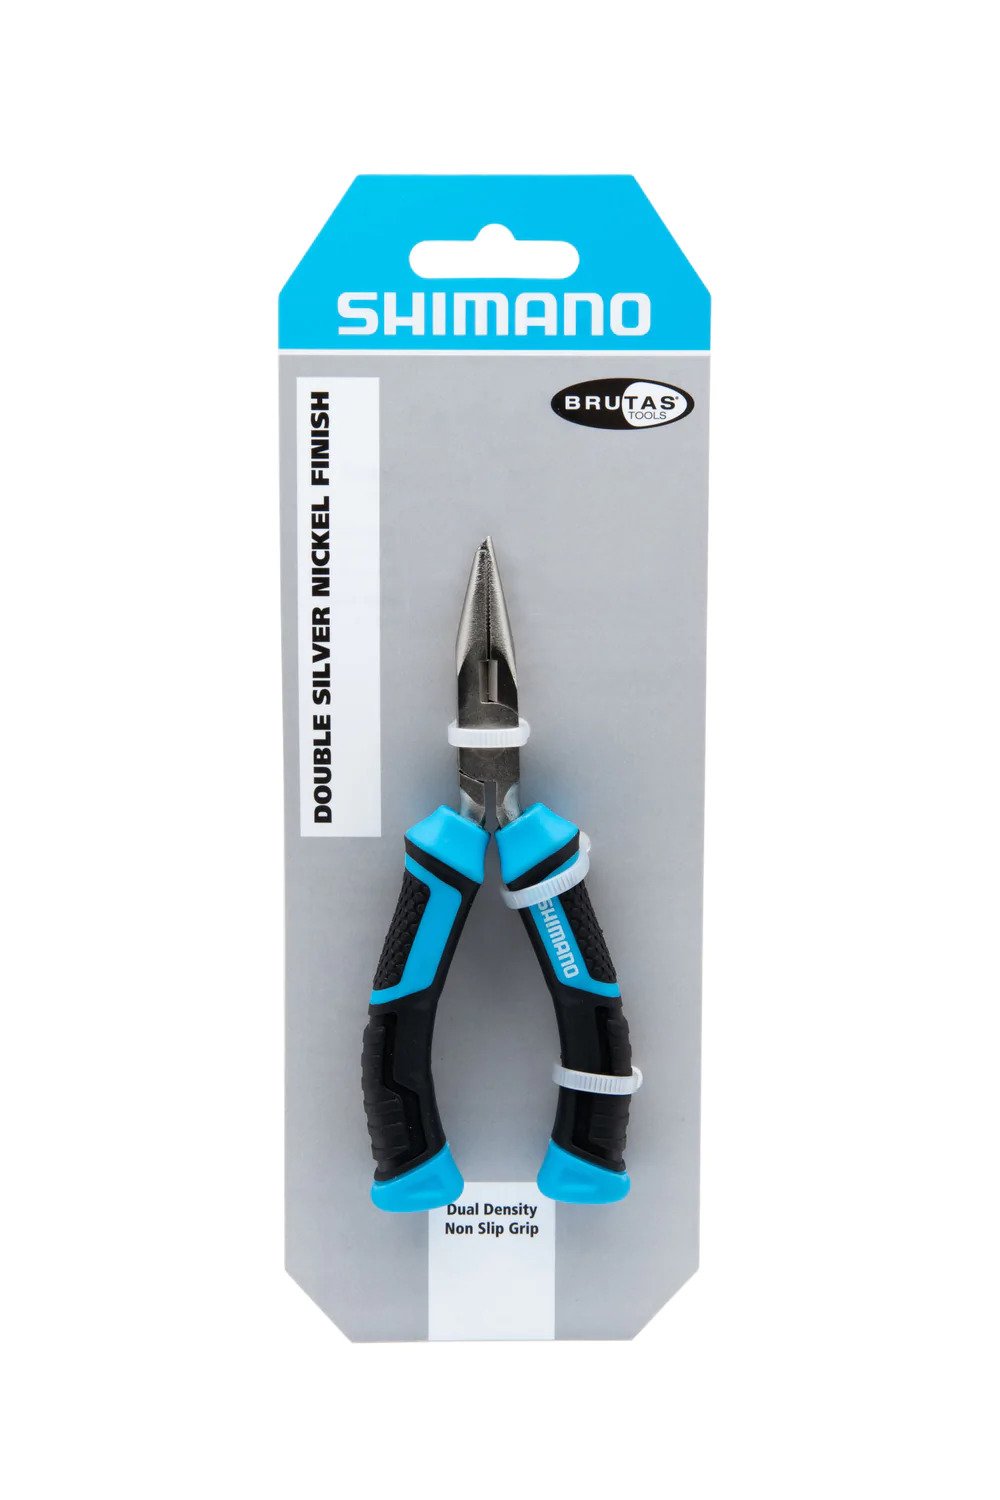 Shimano Brutas 5" Split Ring Pliers, Blk/Cyan Handles, High